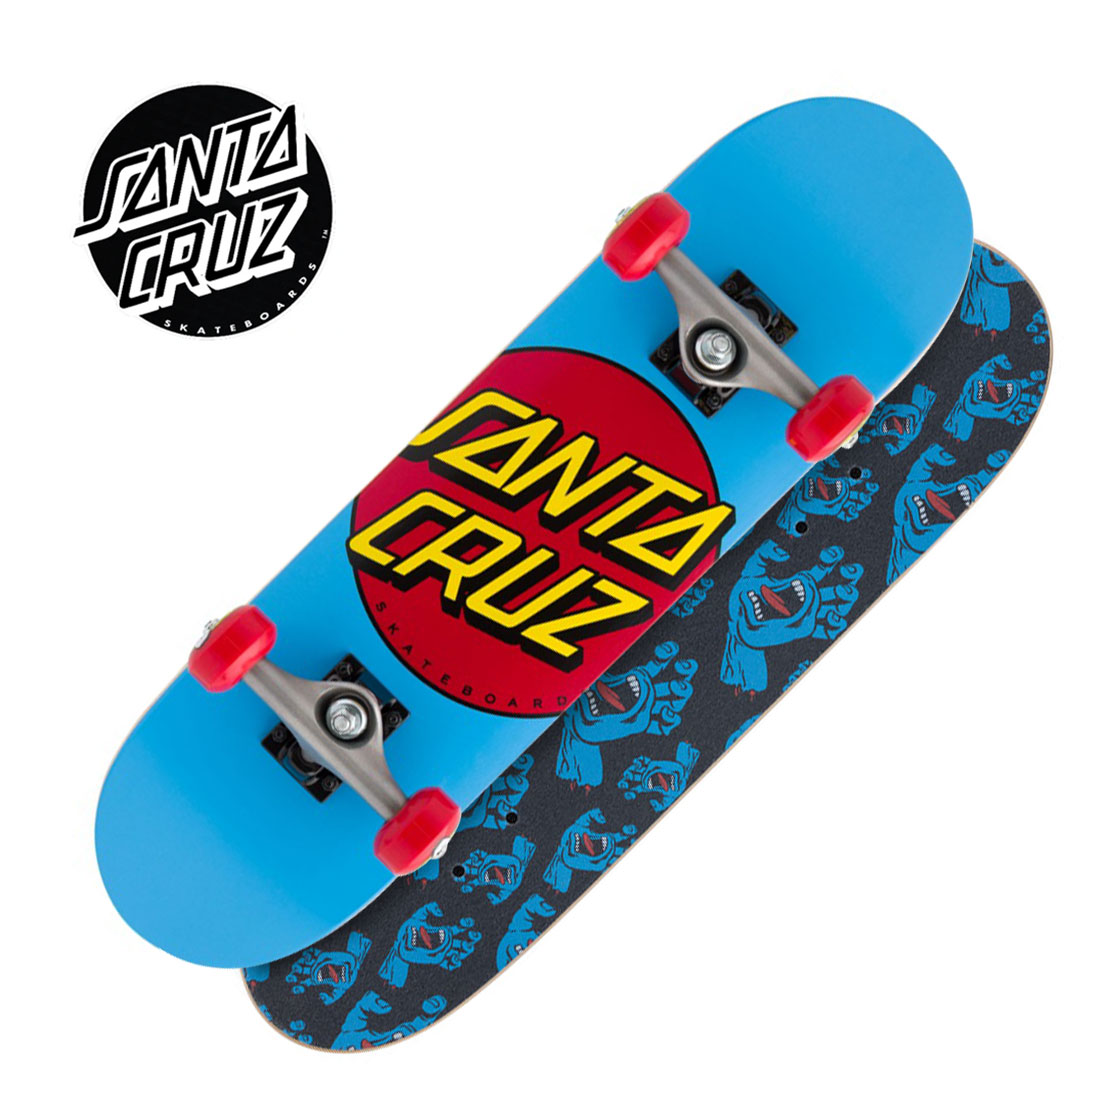 Santa Cruz Classic Dot 7.25 Micro Complete - Blue/Red Skateboard Completes Modern Street